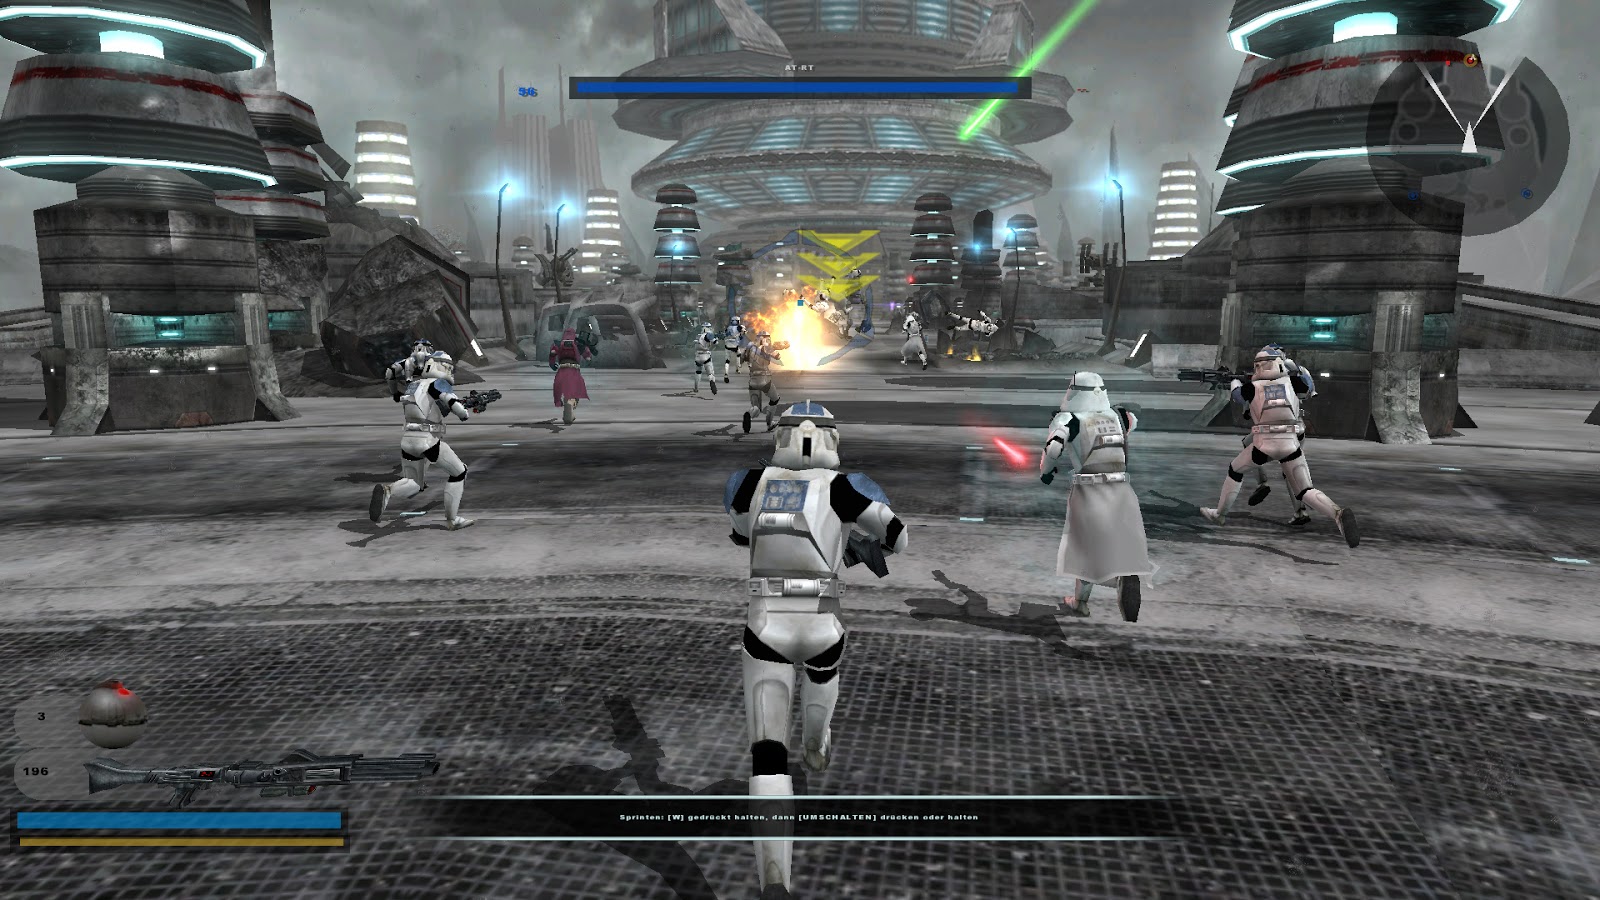 Multiplayer For The Original Star Wars Battlefront Ii Has Been Restored The Star Wars